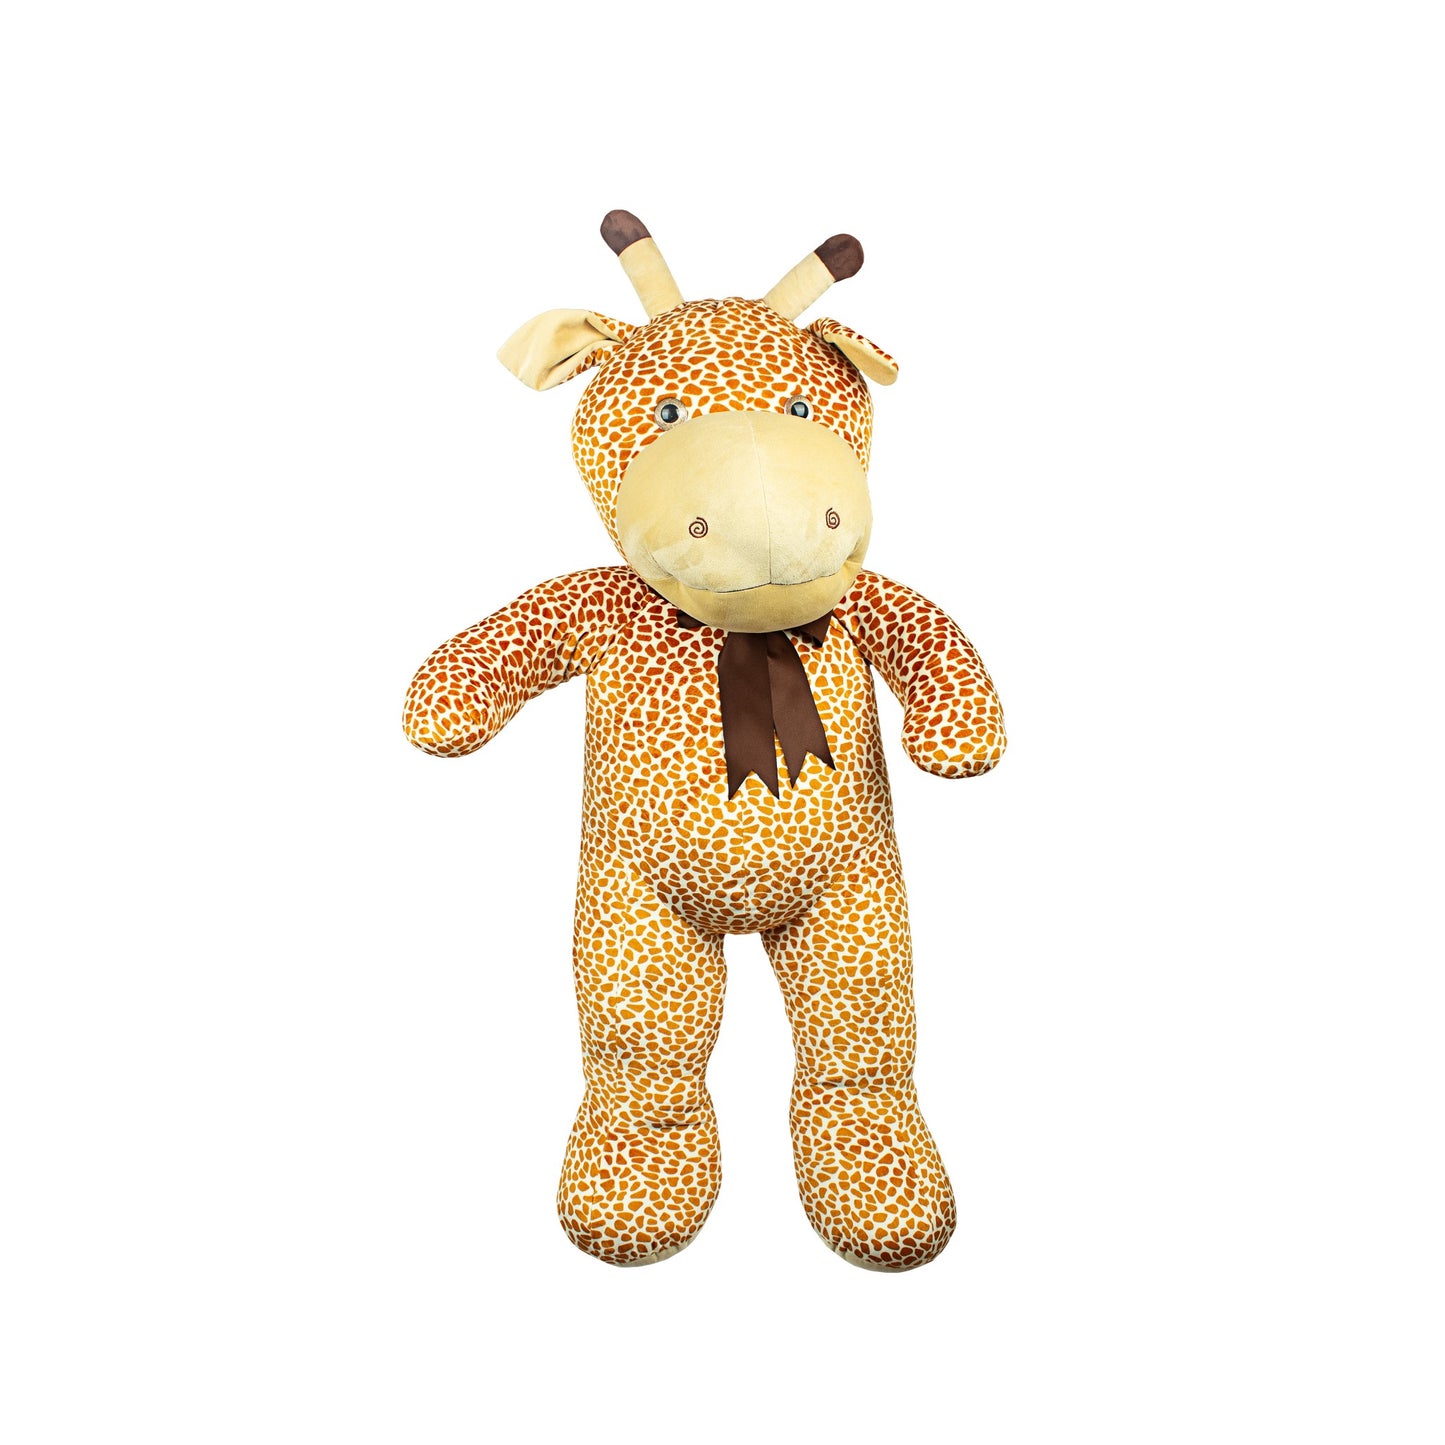 Giraffe Soft Toy | Large Size - 4 ft